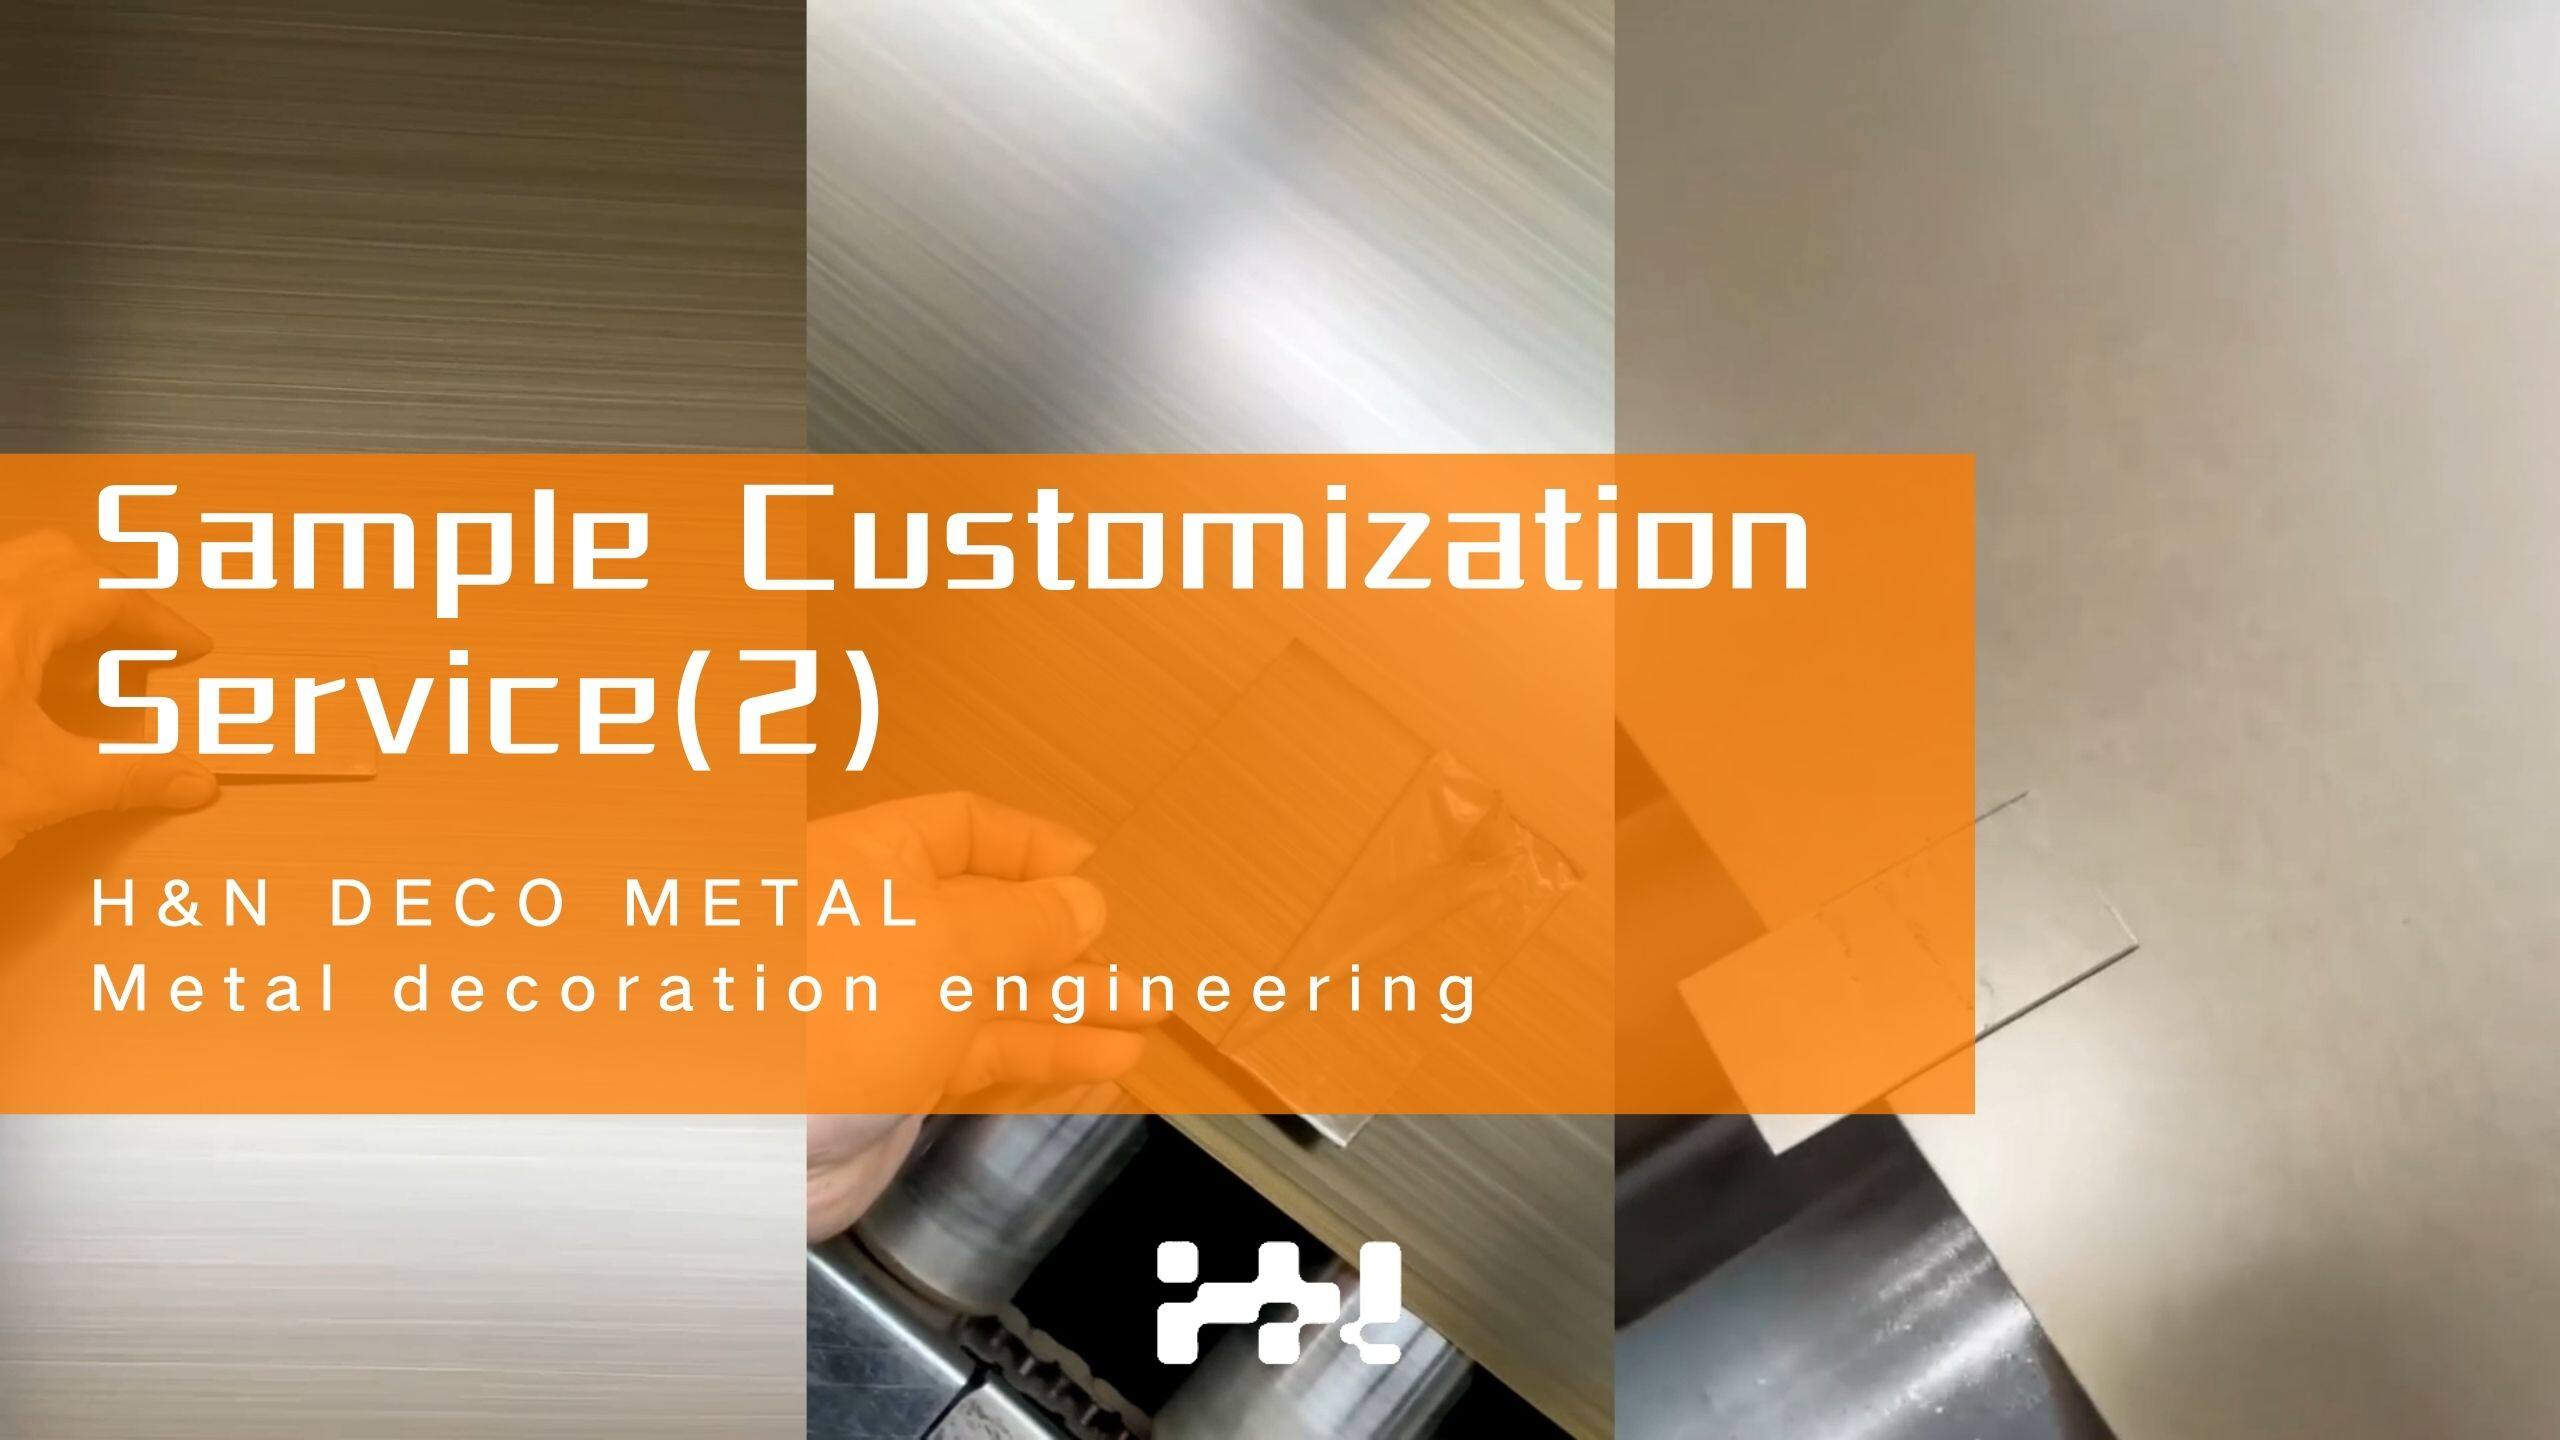 Stainless steel sample Customization Service(2)